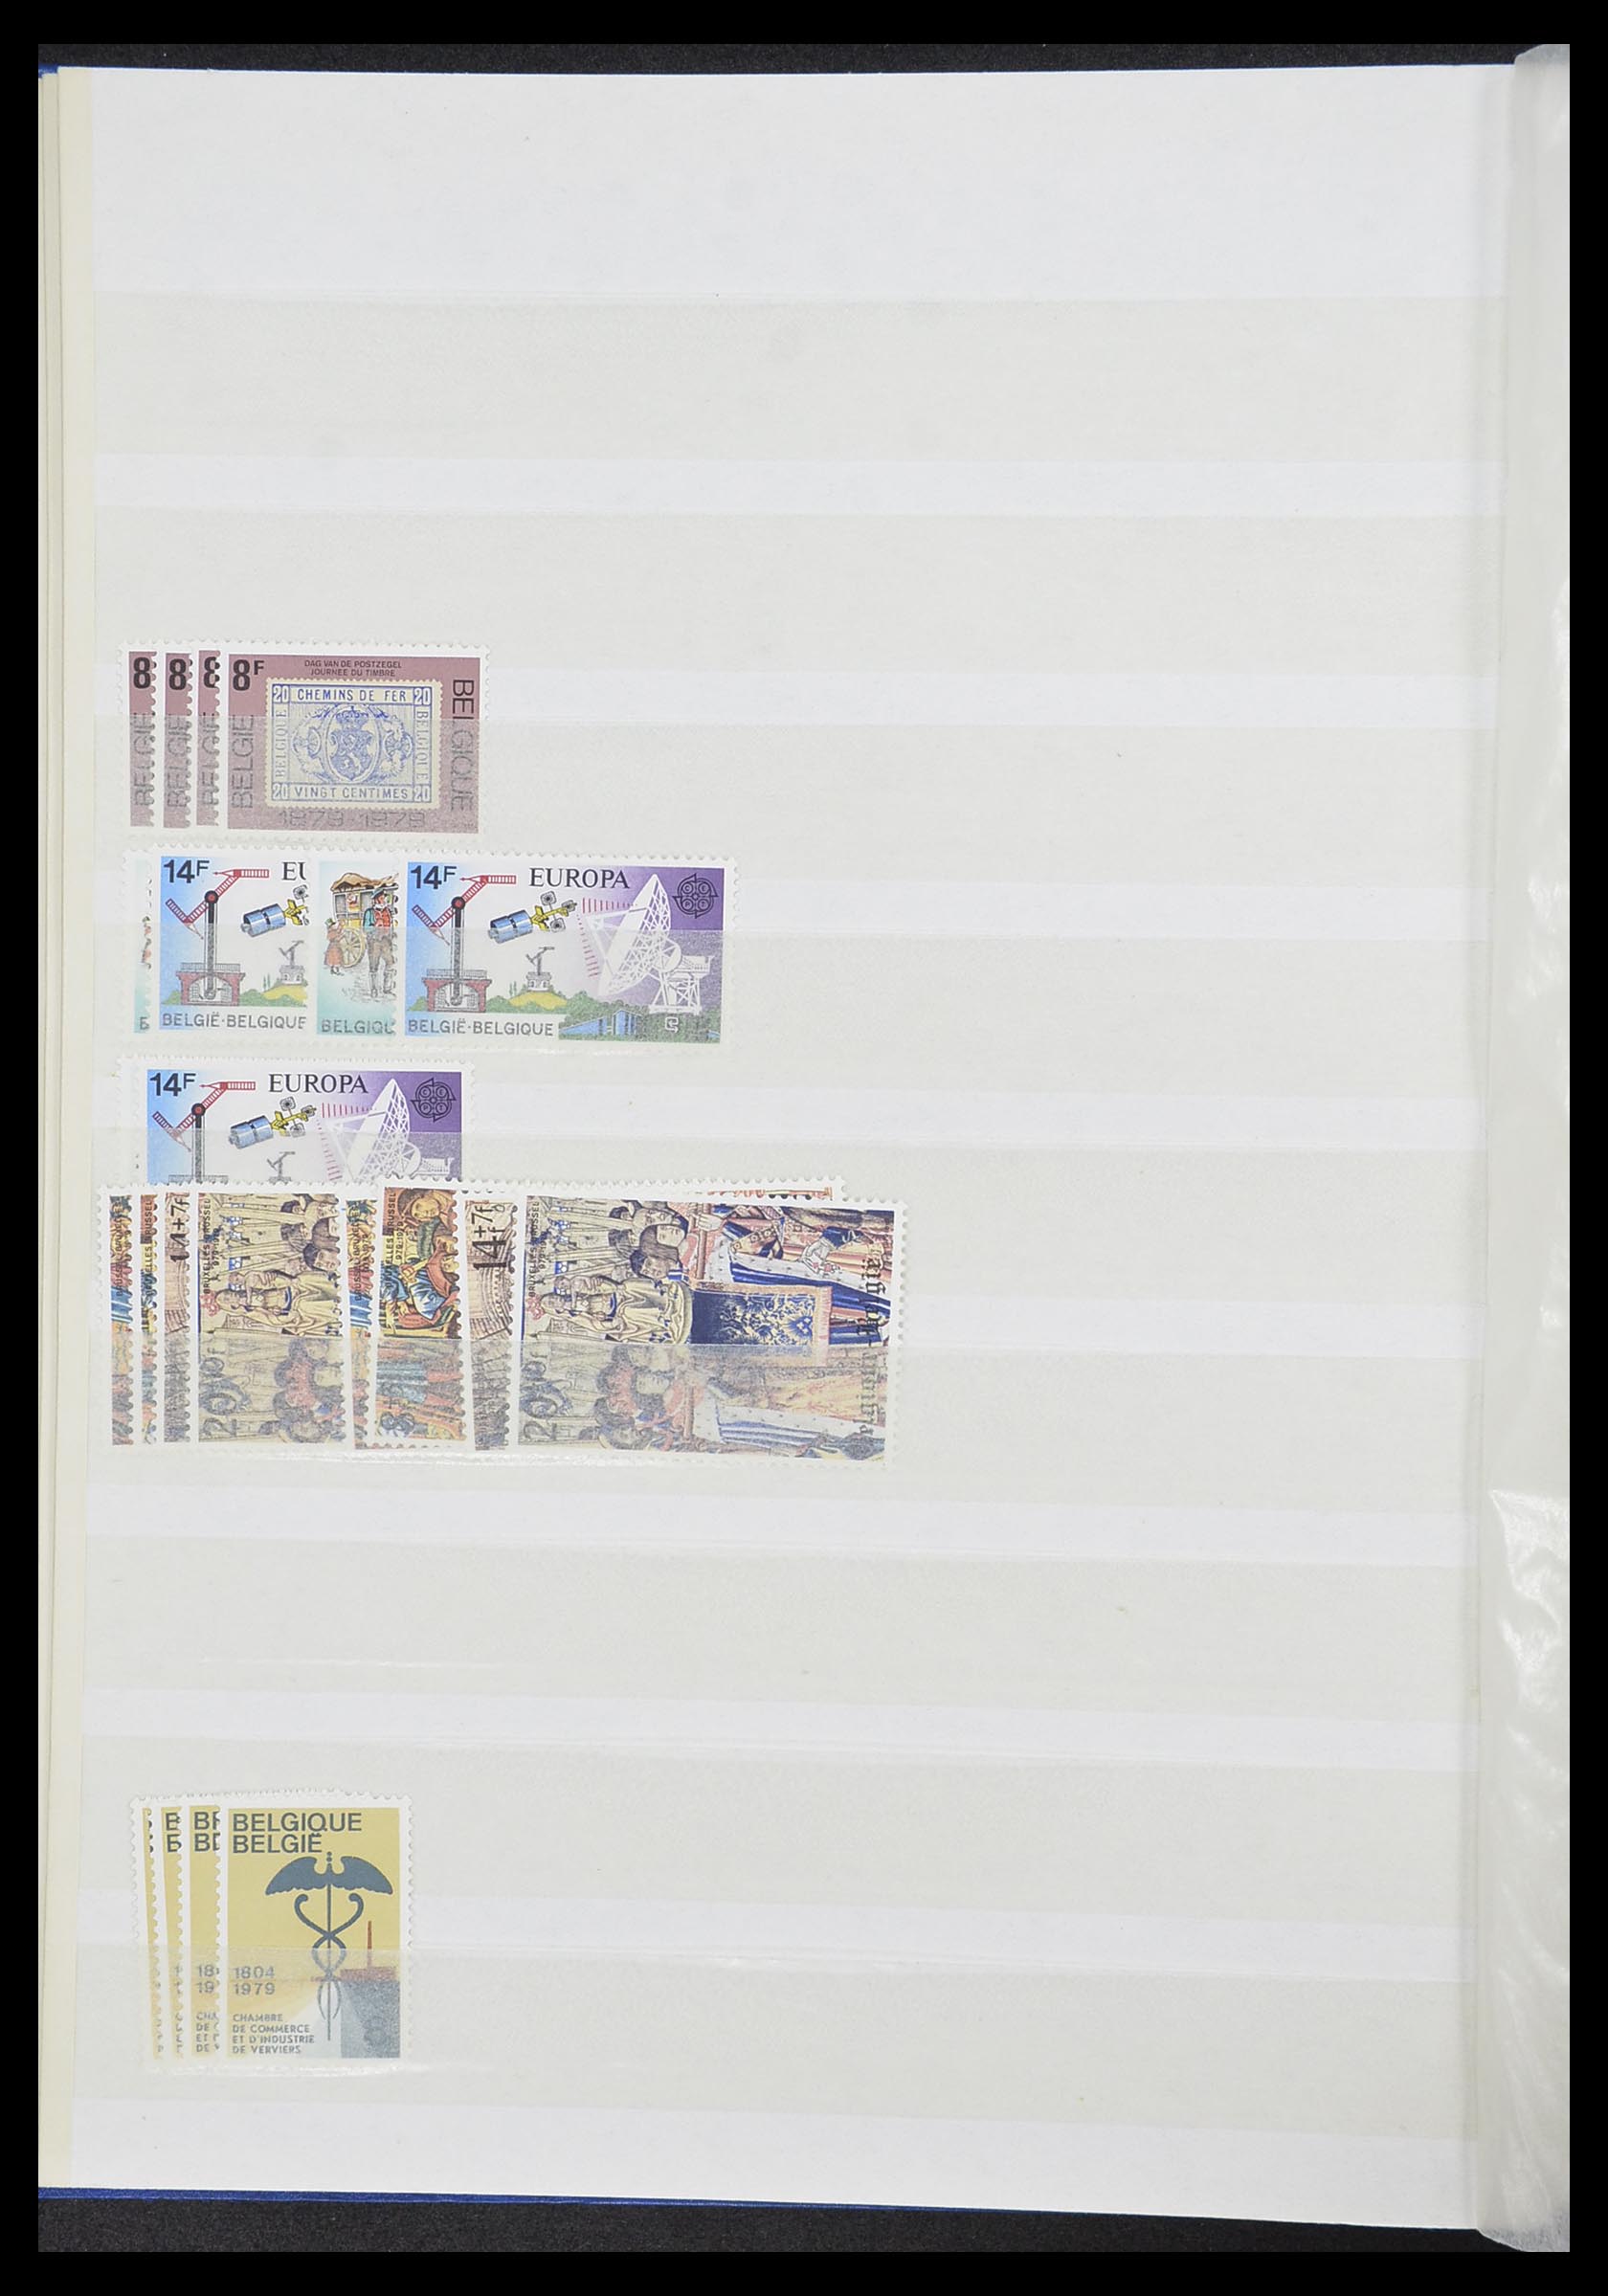 33874 023 - Stamp collection 33874 Belgium 1973-2004.